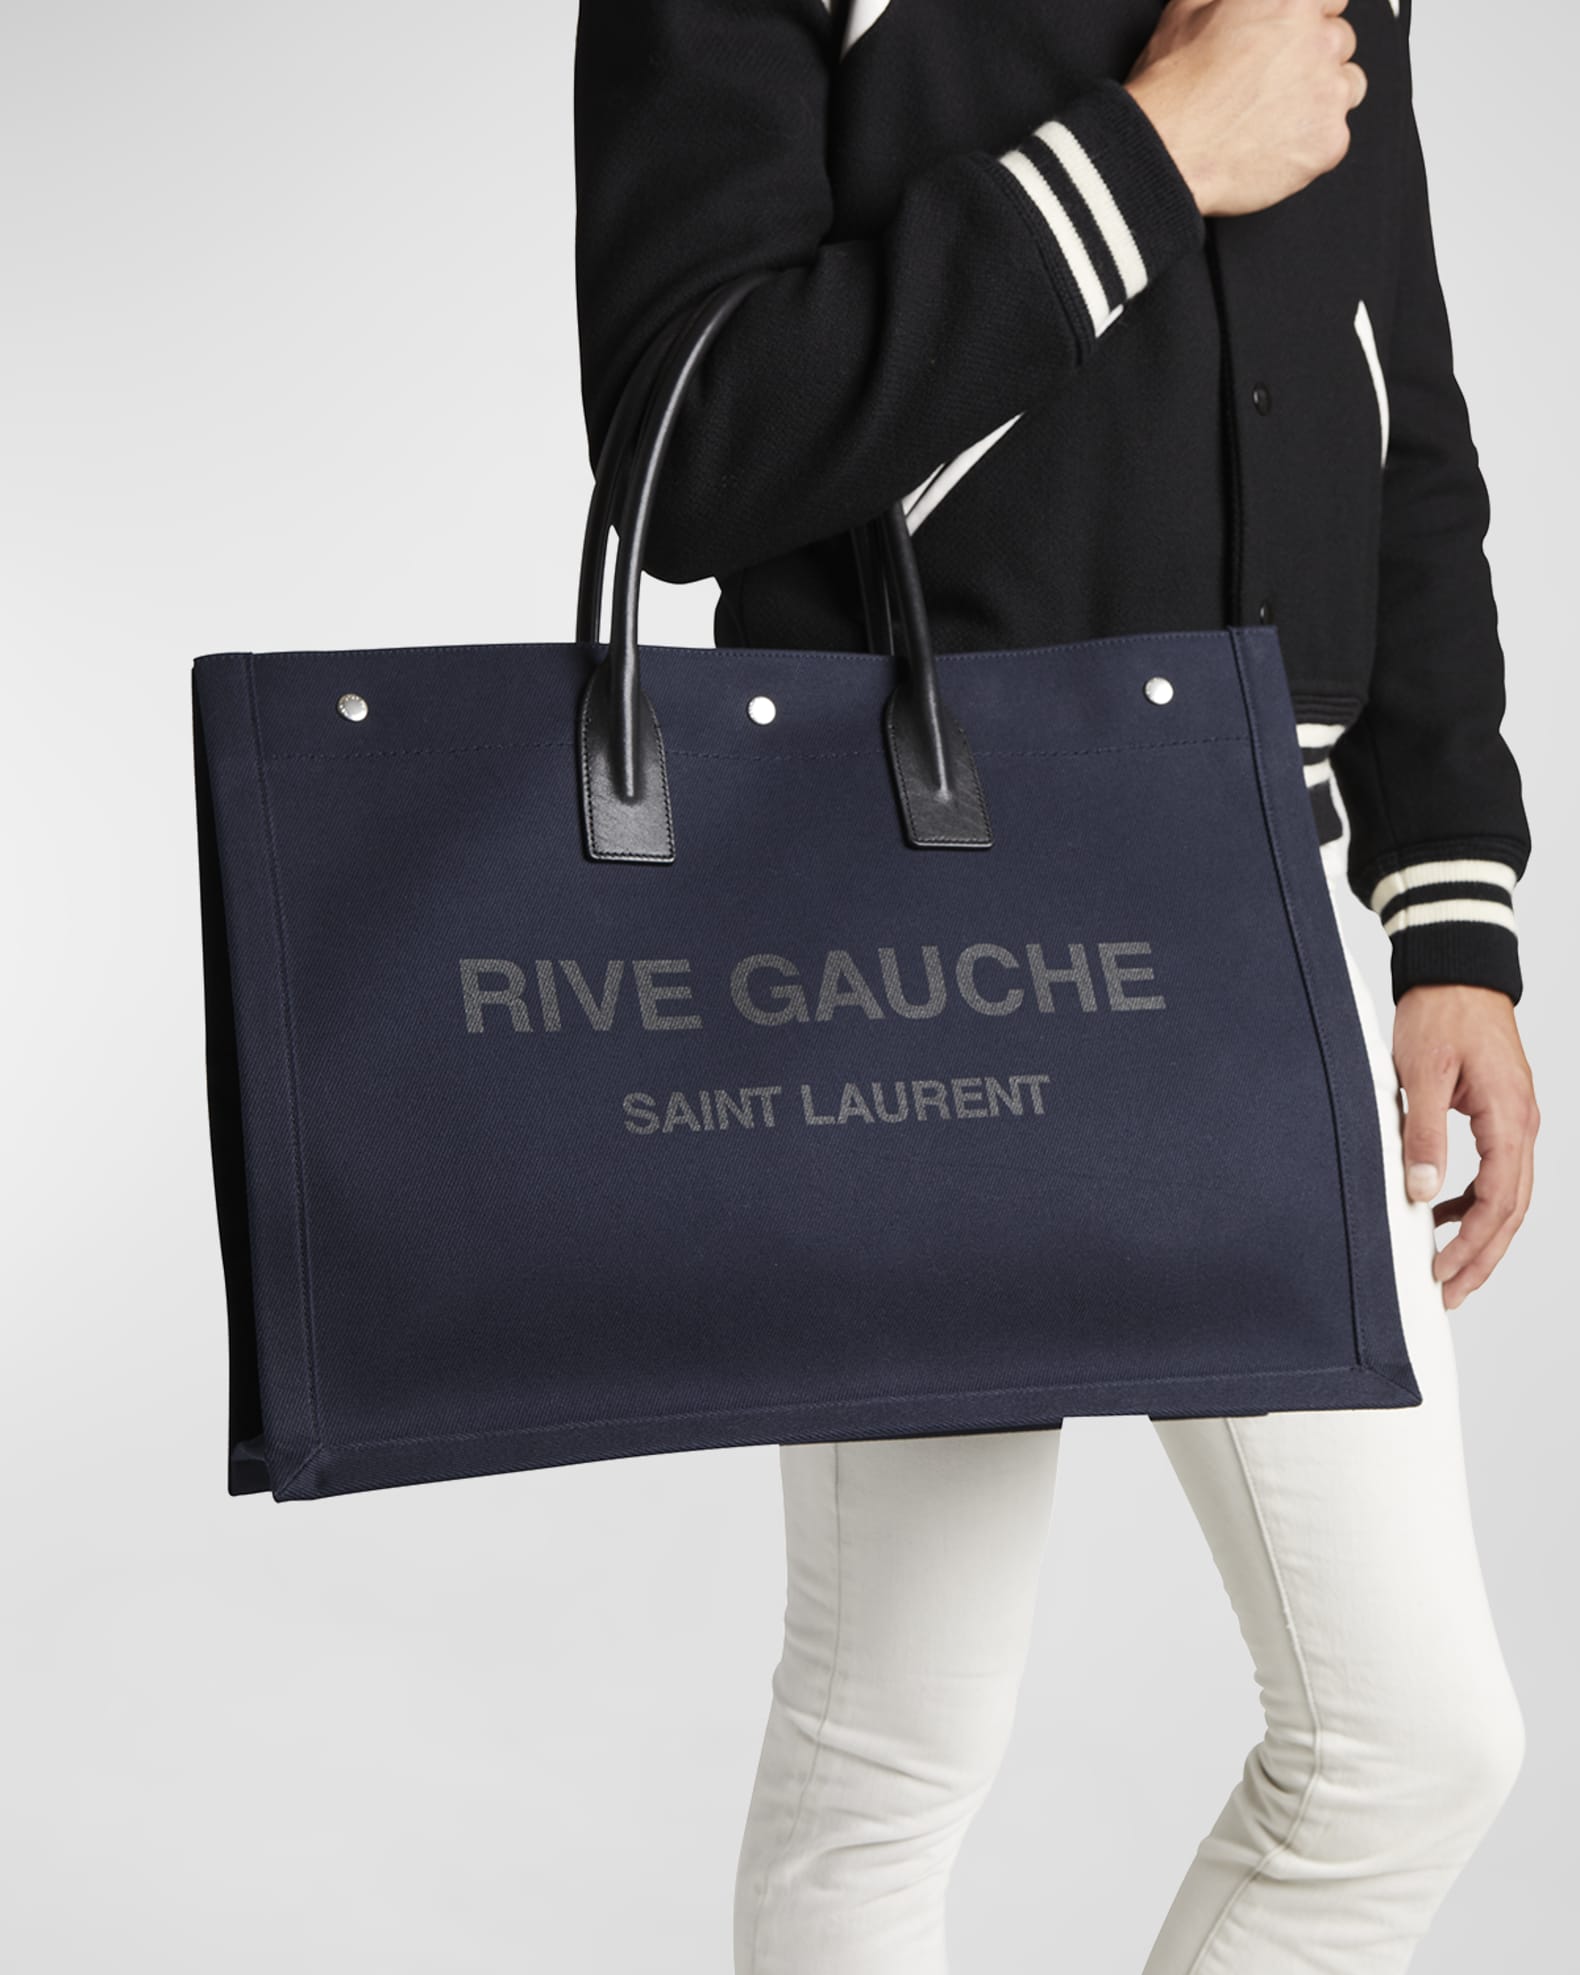 Saint Laurent Men's Noe Rive Gauche Canvas Tote Bag | Neiman Marcus